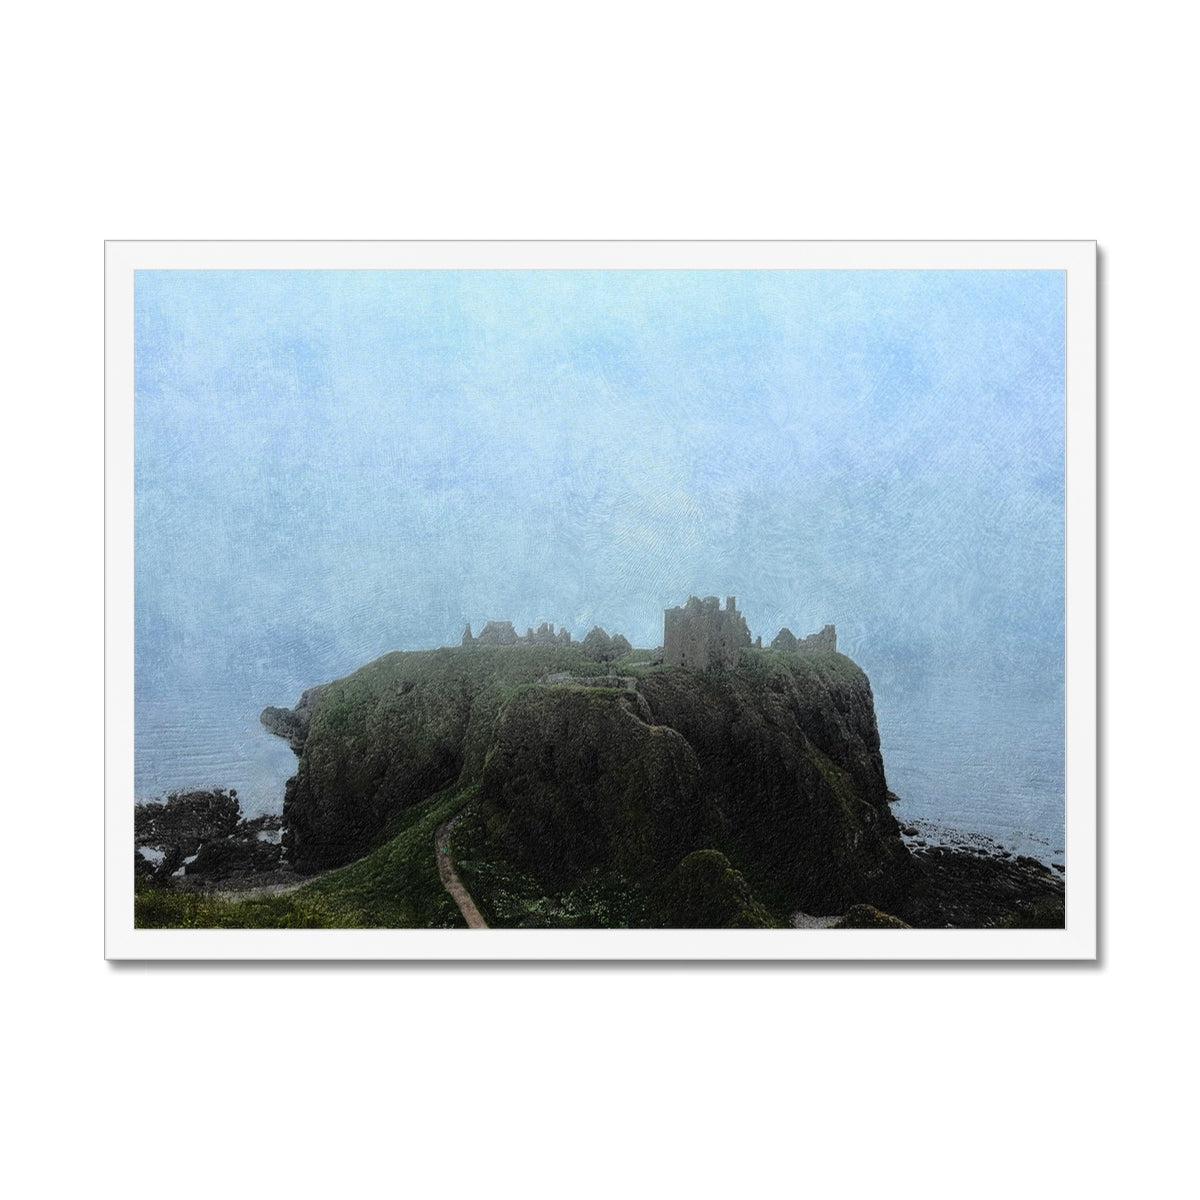 Dunnottar Castle Mist Painting | Framed Prints From Scotland-Framed Prints-Historic & Iconic Scotland Art Gallery-A2 Landscape-White Frame-Paintings, Prints, Homeware, Art Gifts From Scotland By Scottish Artist Kevin Hunter